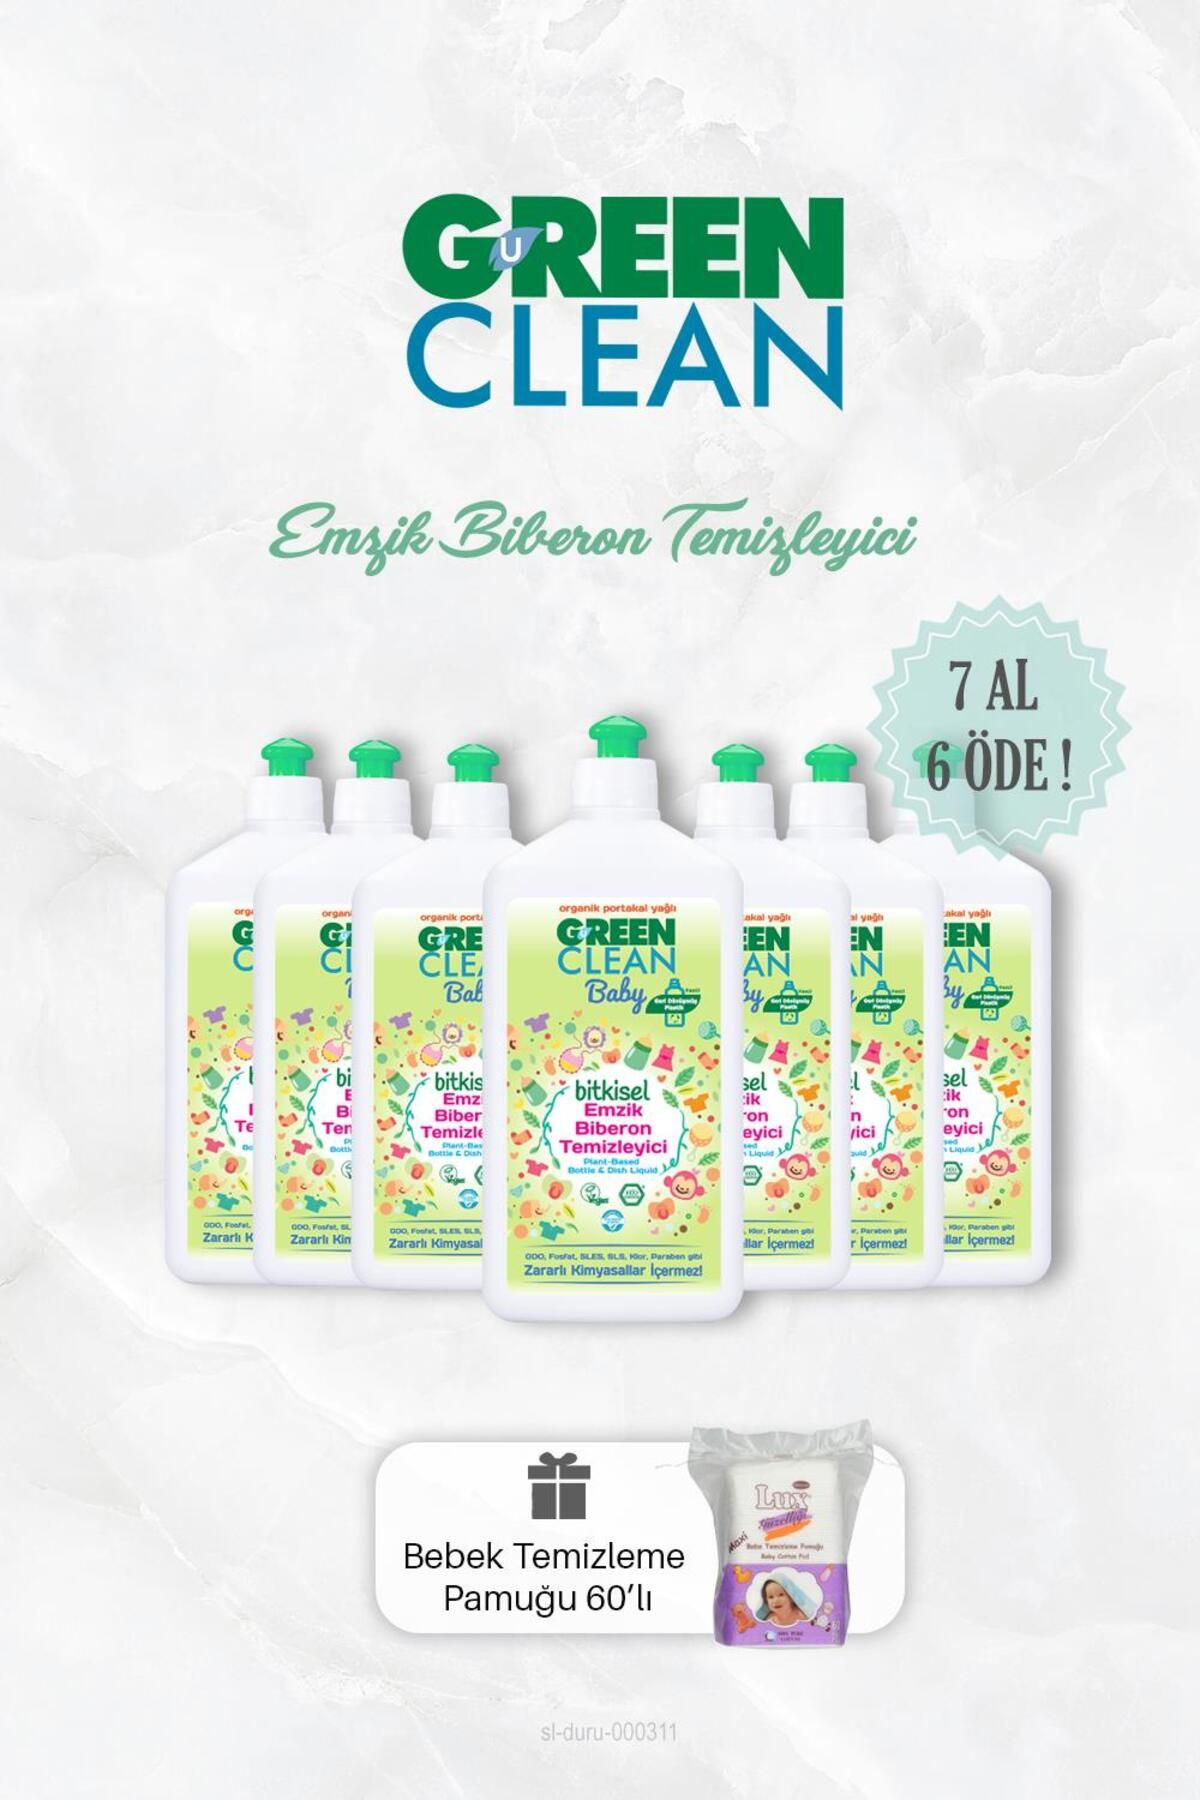 Green Clean 7 Al 6 Öde Bitkisel Emzik Biberon Temizleyici 500 ml